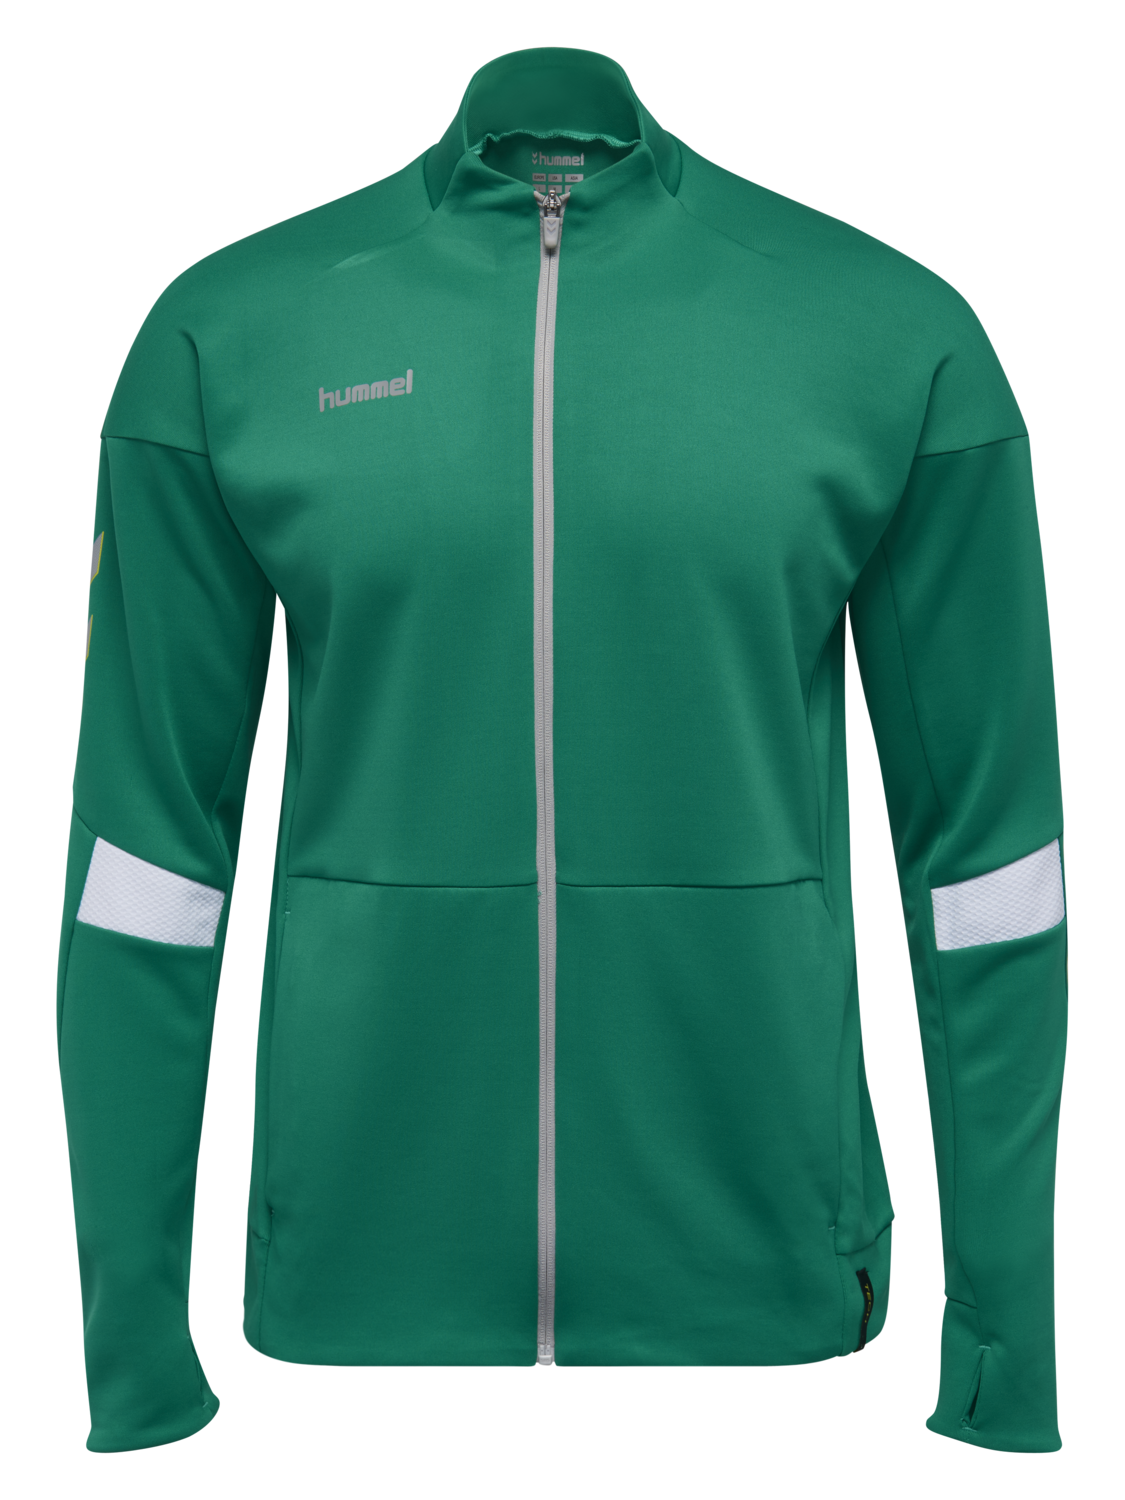 green sports jacket